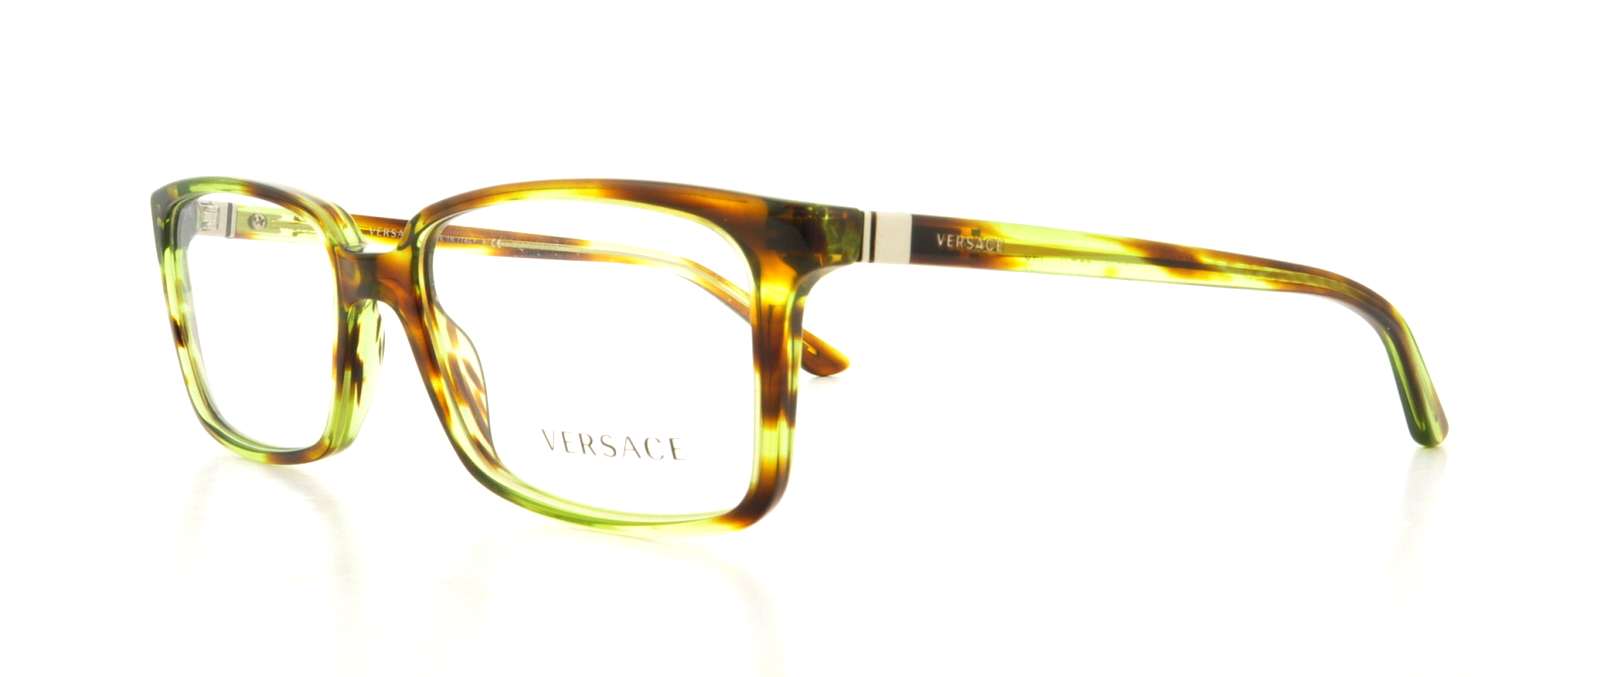 Picture of Versace Eyeglasses VE3174